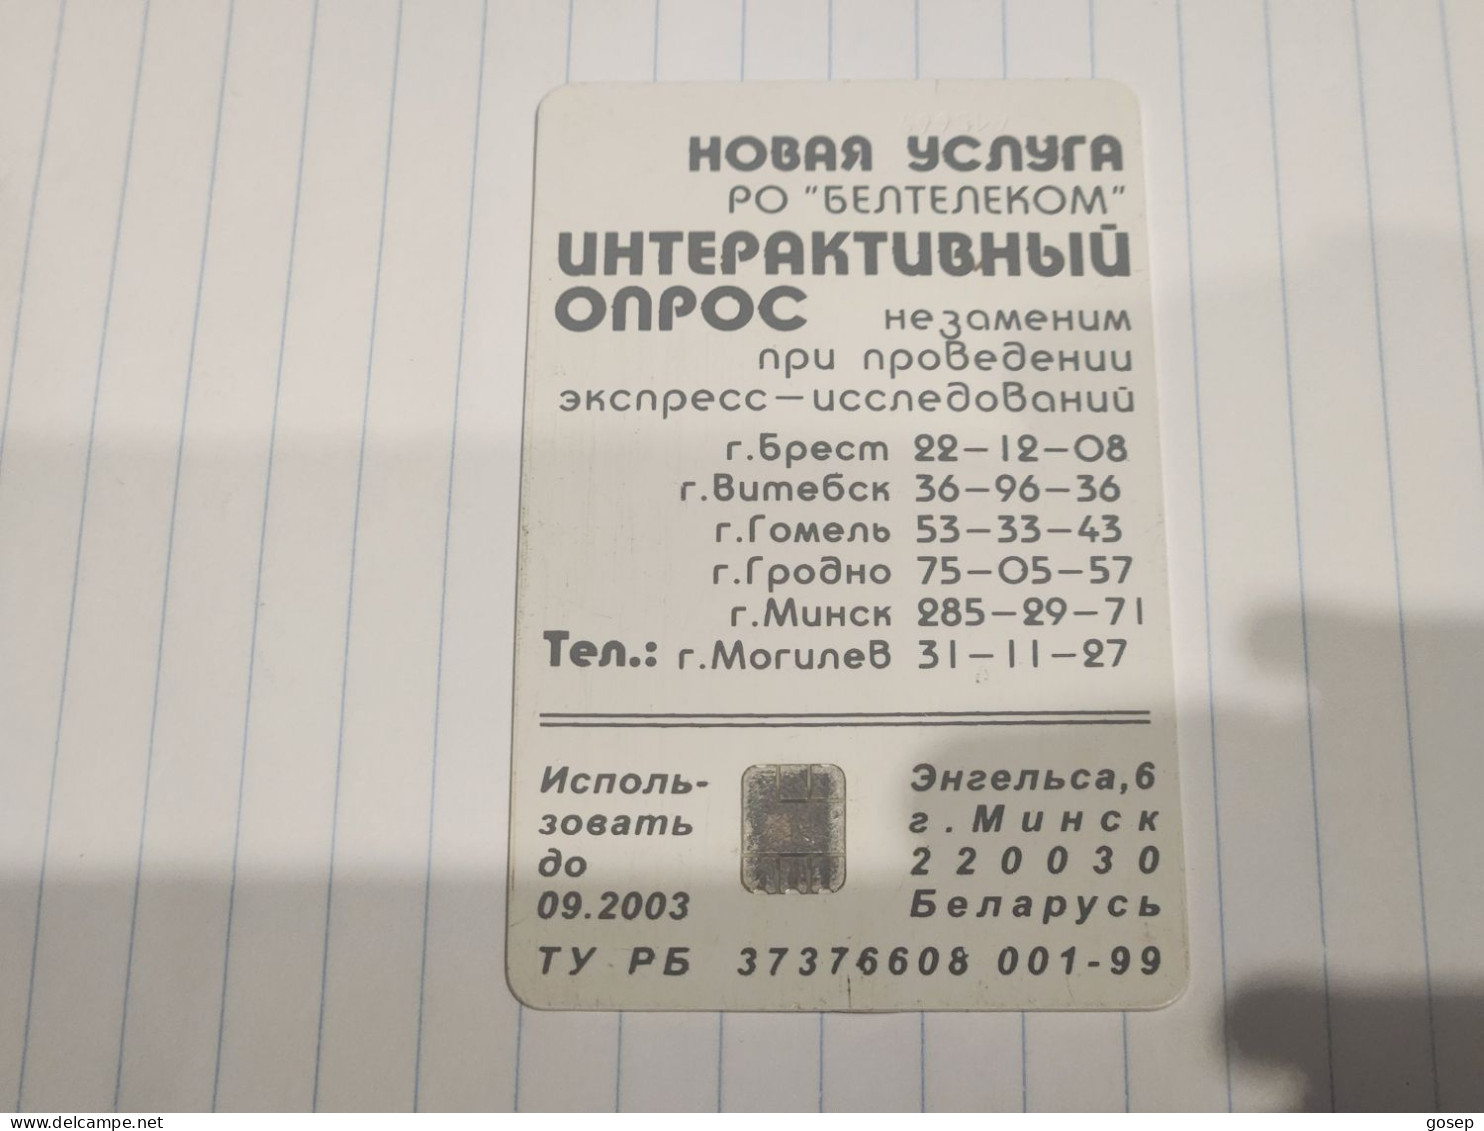 BELARUS-(BY-BEL-100)-Radivil Chernyi (1515-1565)-(59)(415669)(silver Chip)(120MINTES)-used Card+1card Prepiad Free - Wit-Rusland